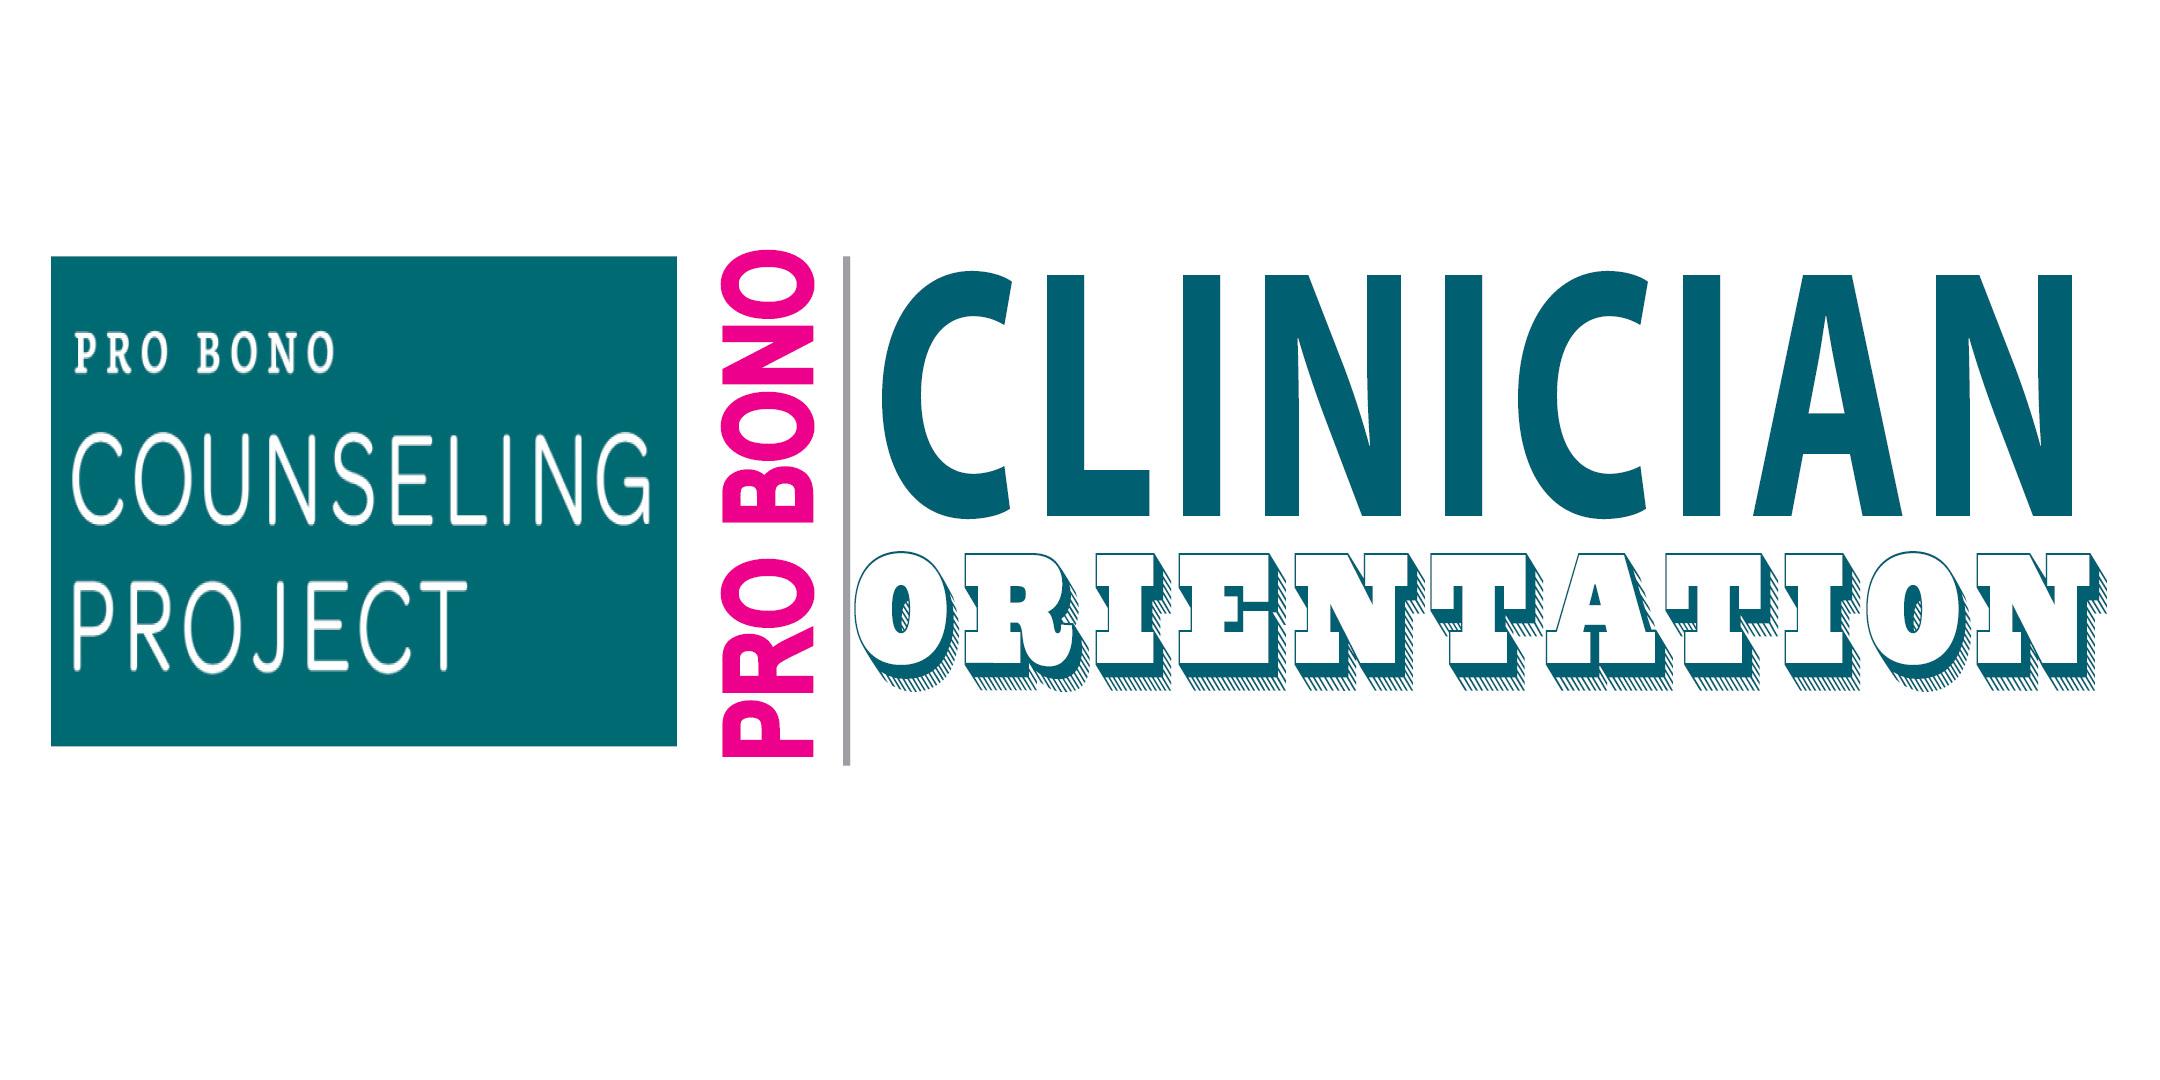 Pro Bono Clinician Orientation 2-20-2020